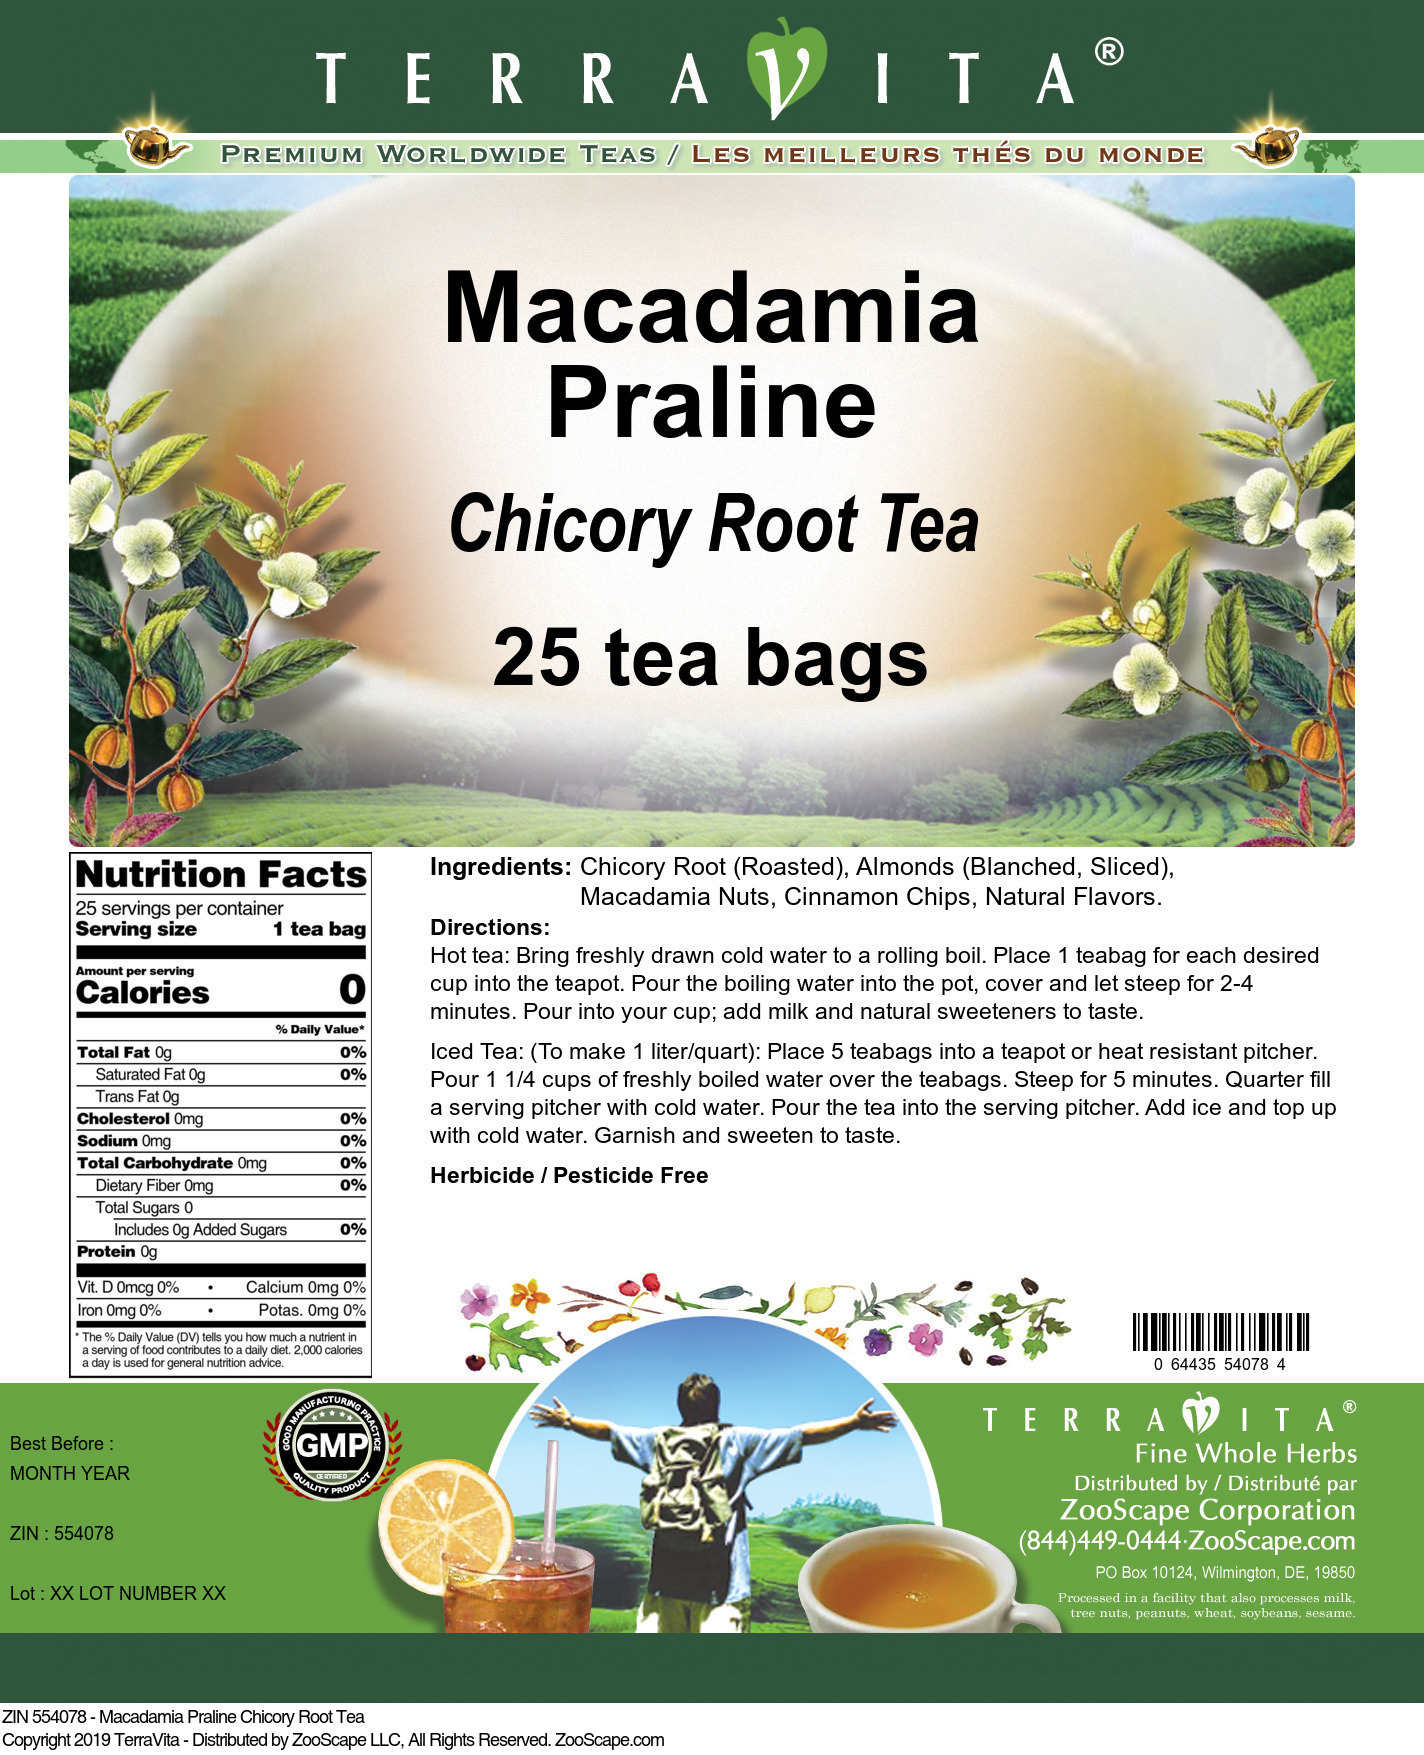 Macadamia Praline Chicory Root Tea - Label